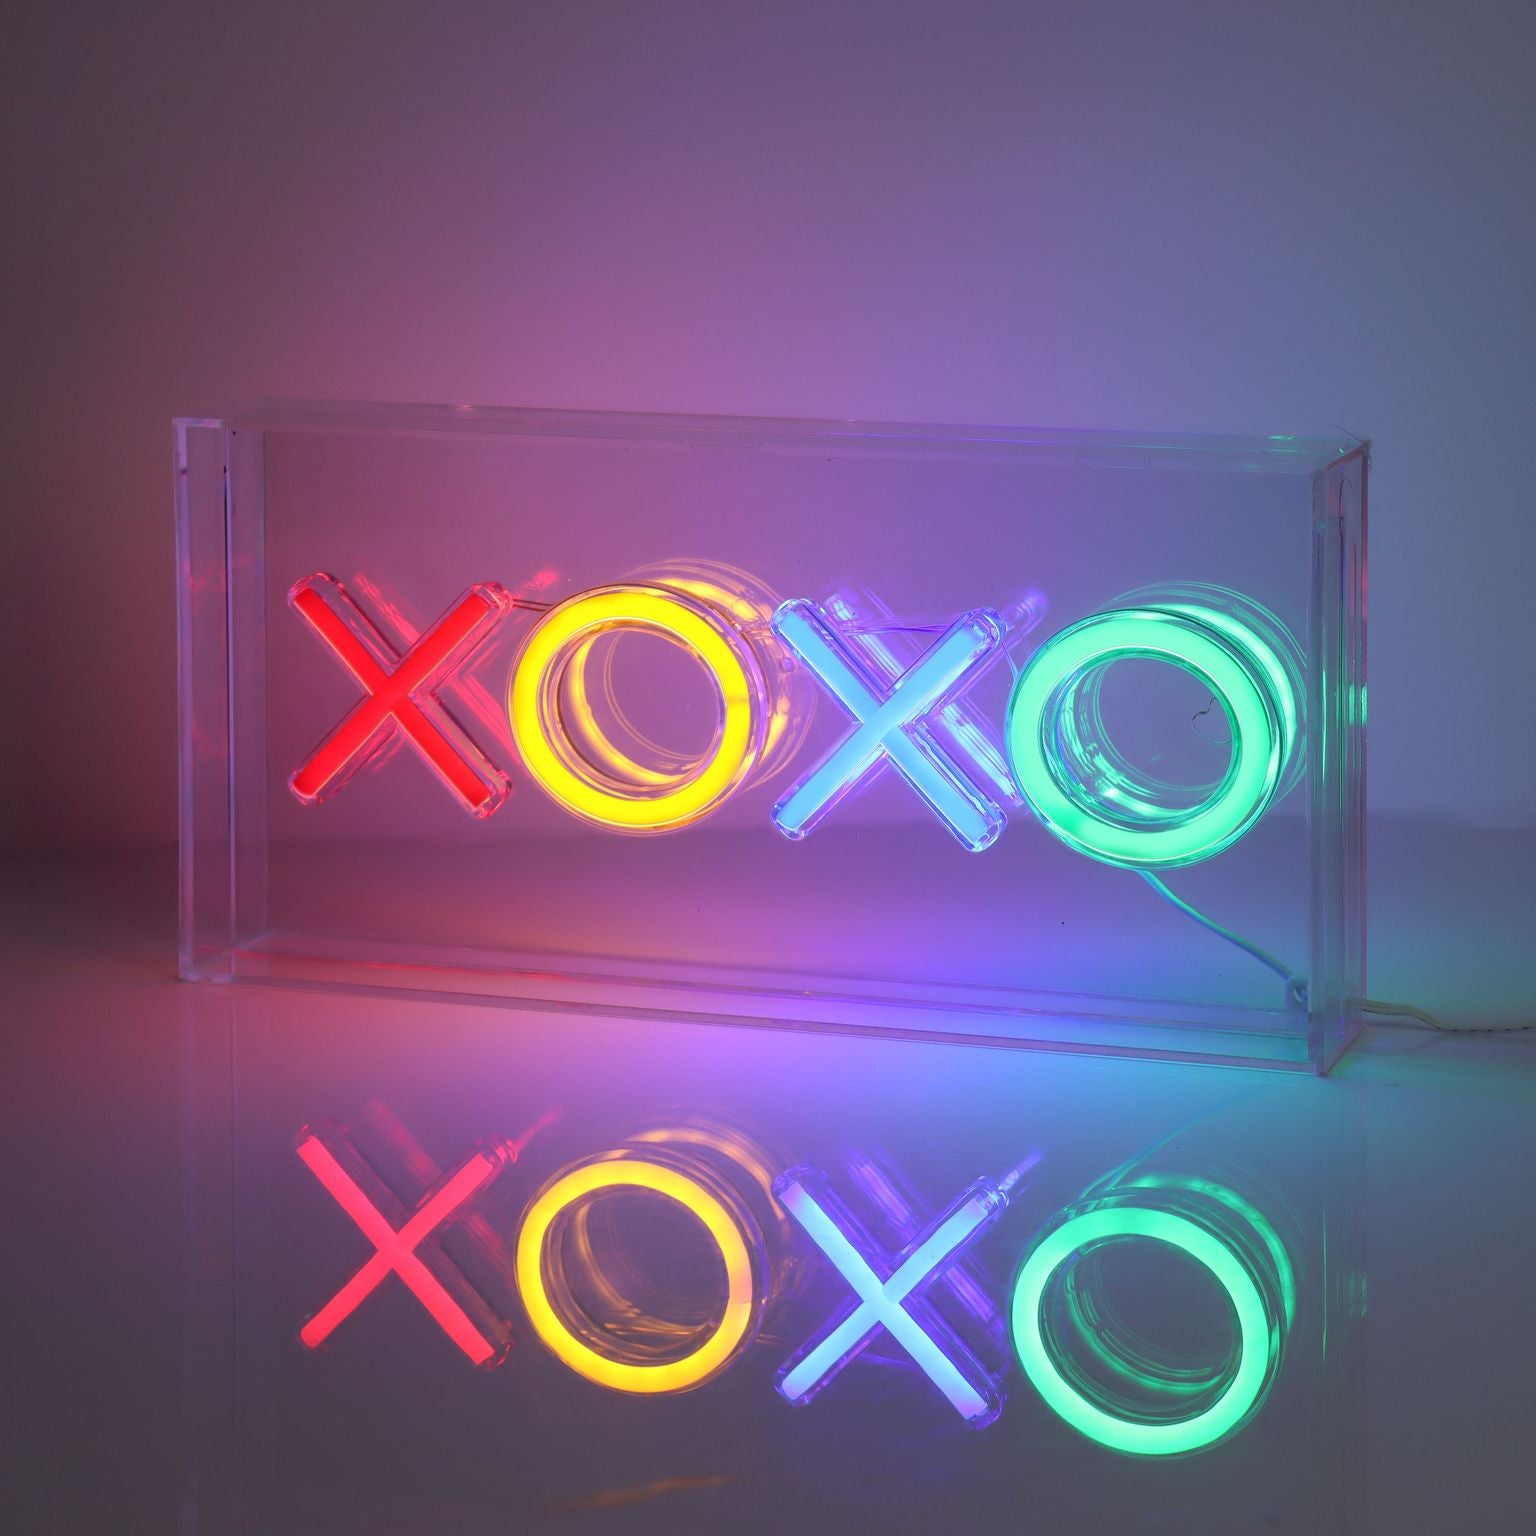 Neon Art Desktop & Wall Signs-XOXO